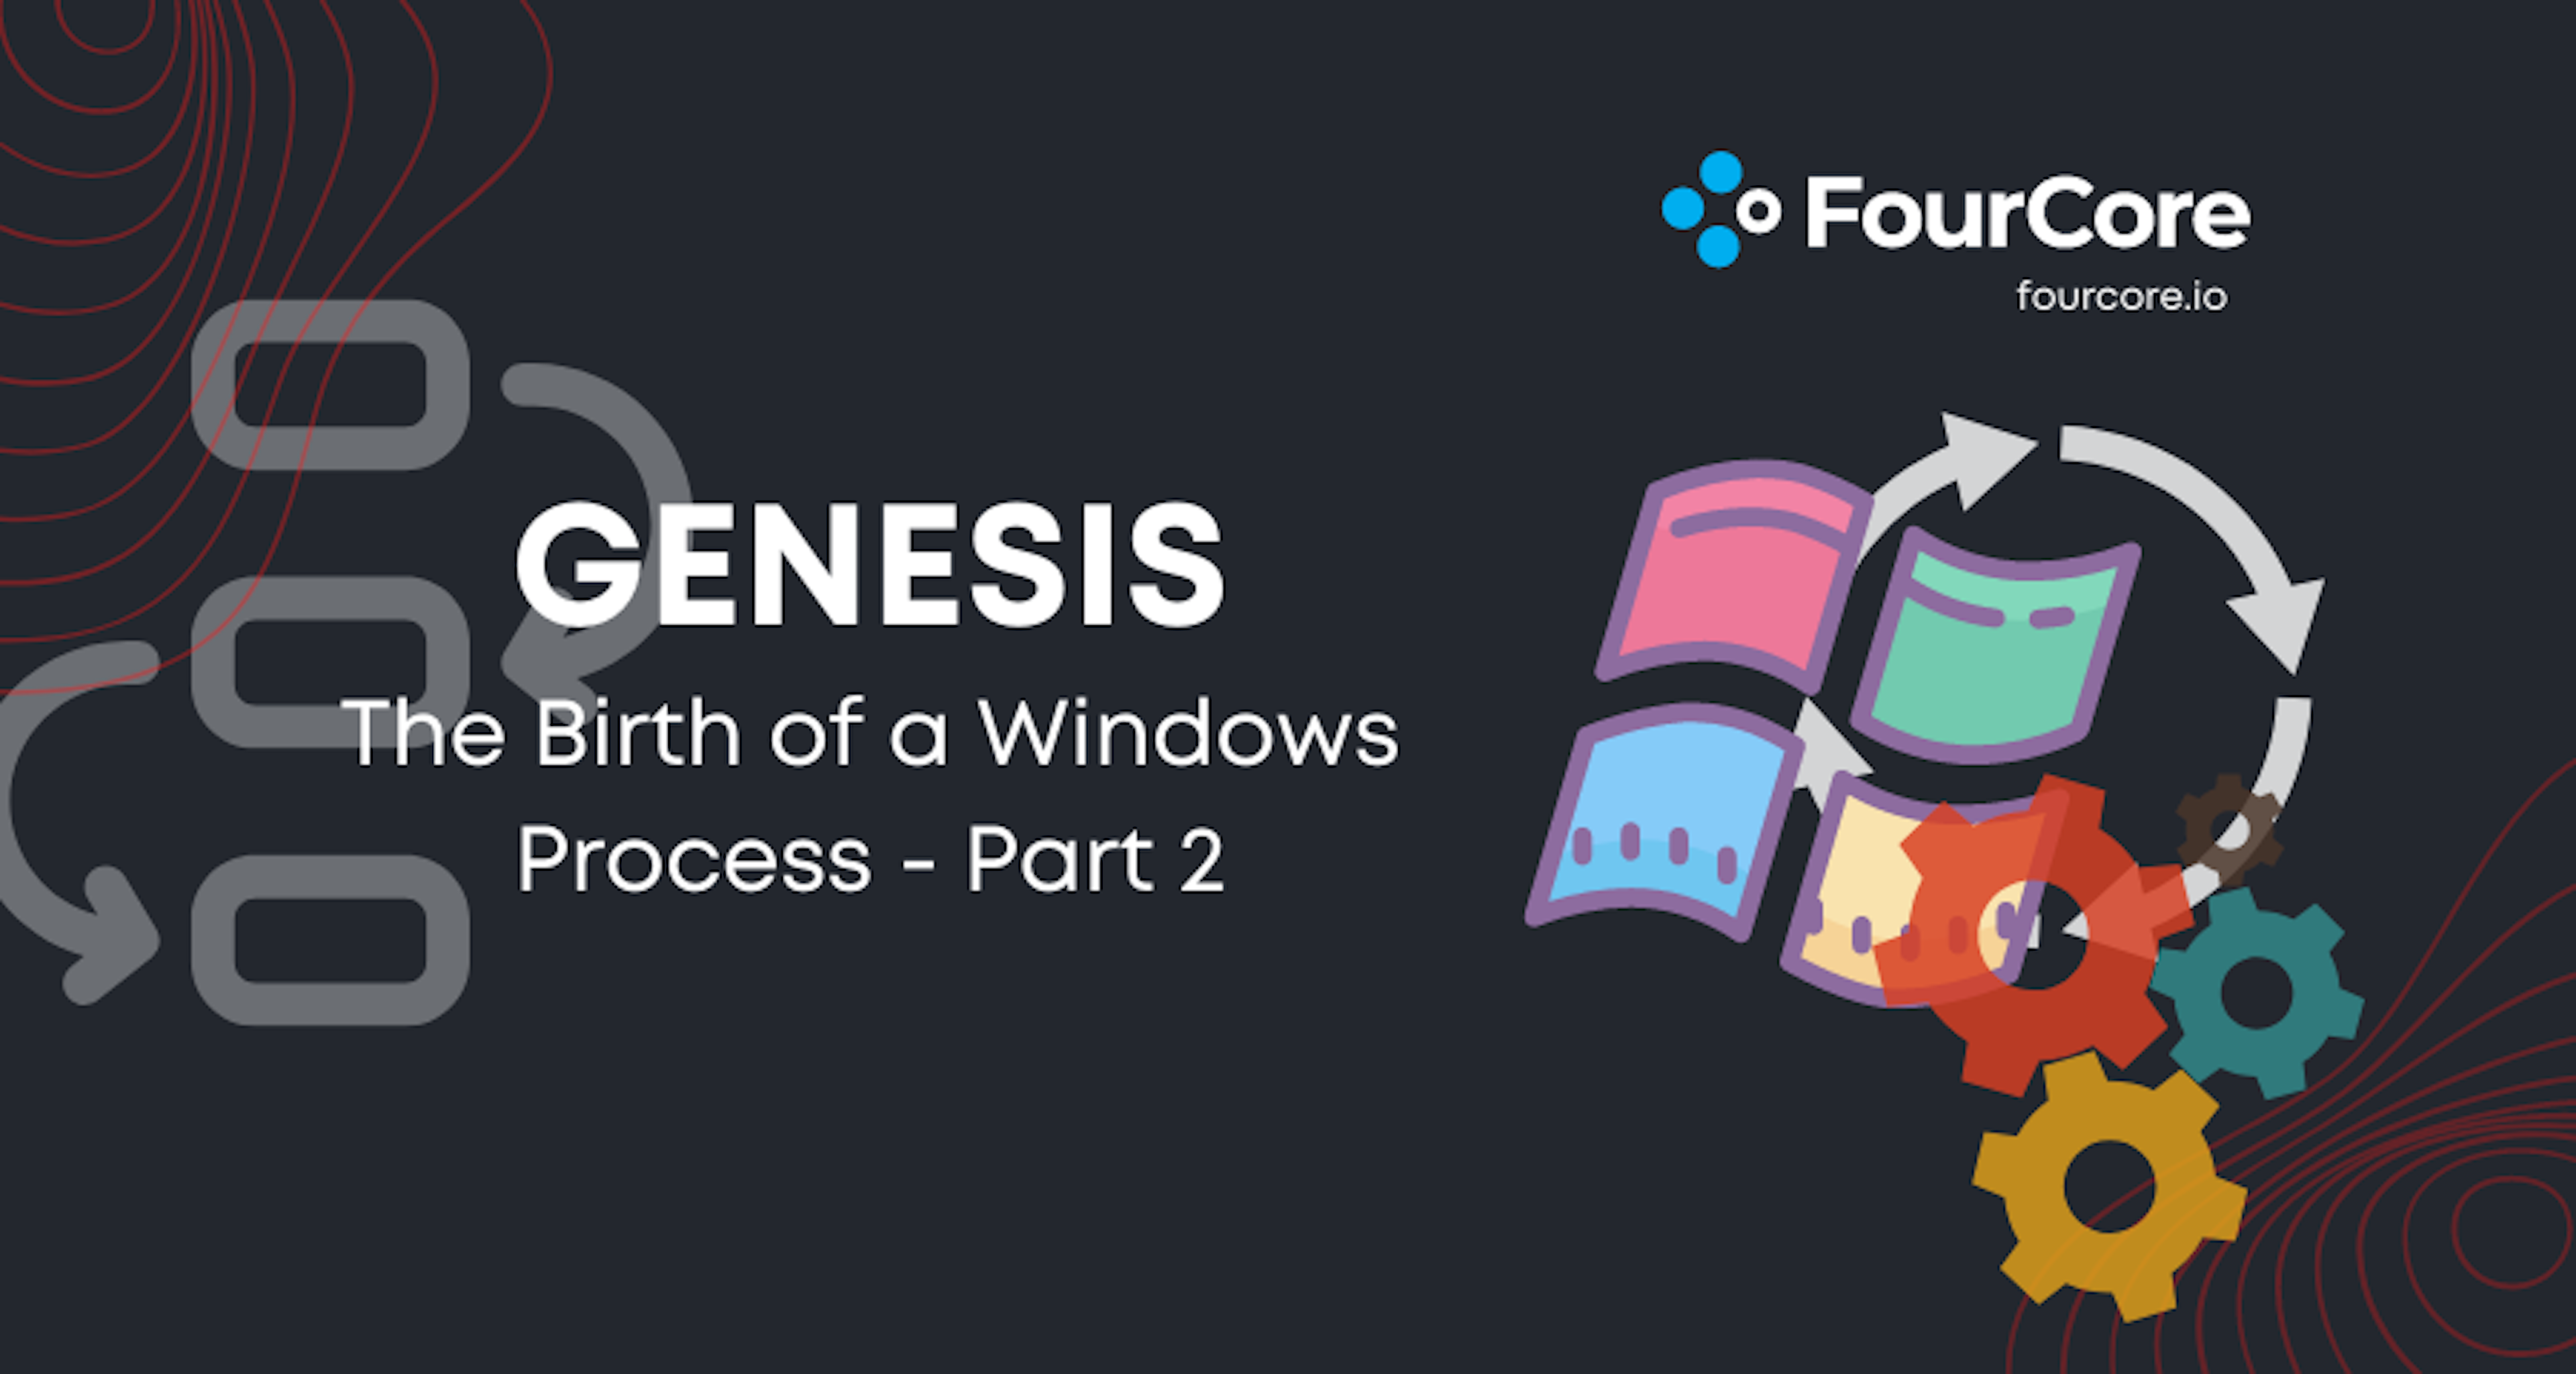 Genesis - The Birth of a Windows Process (Part 2) Blog Post Image